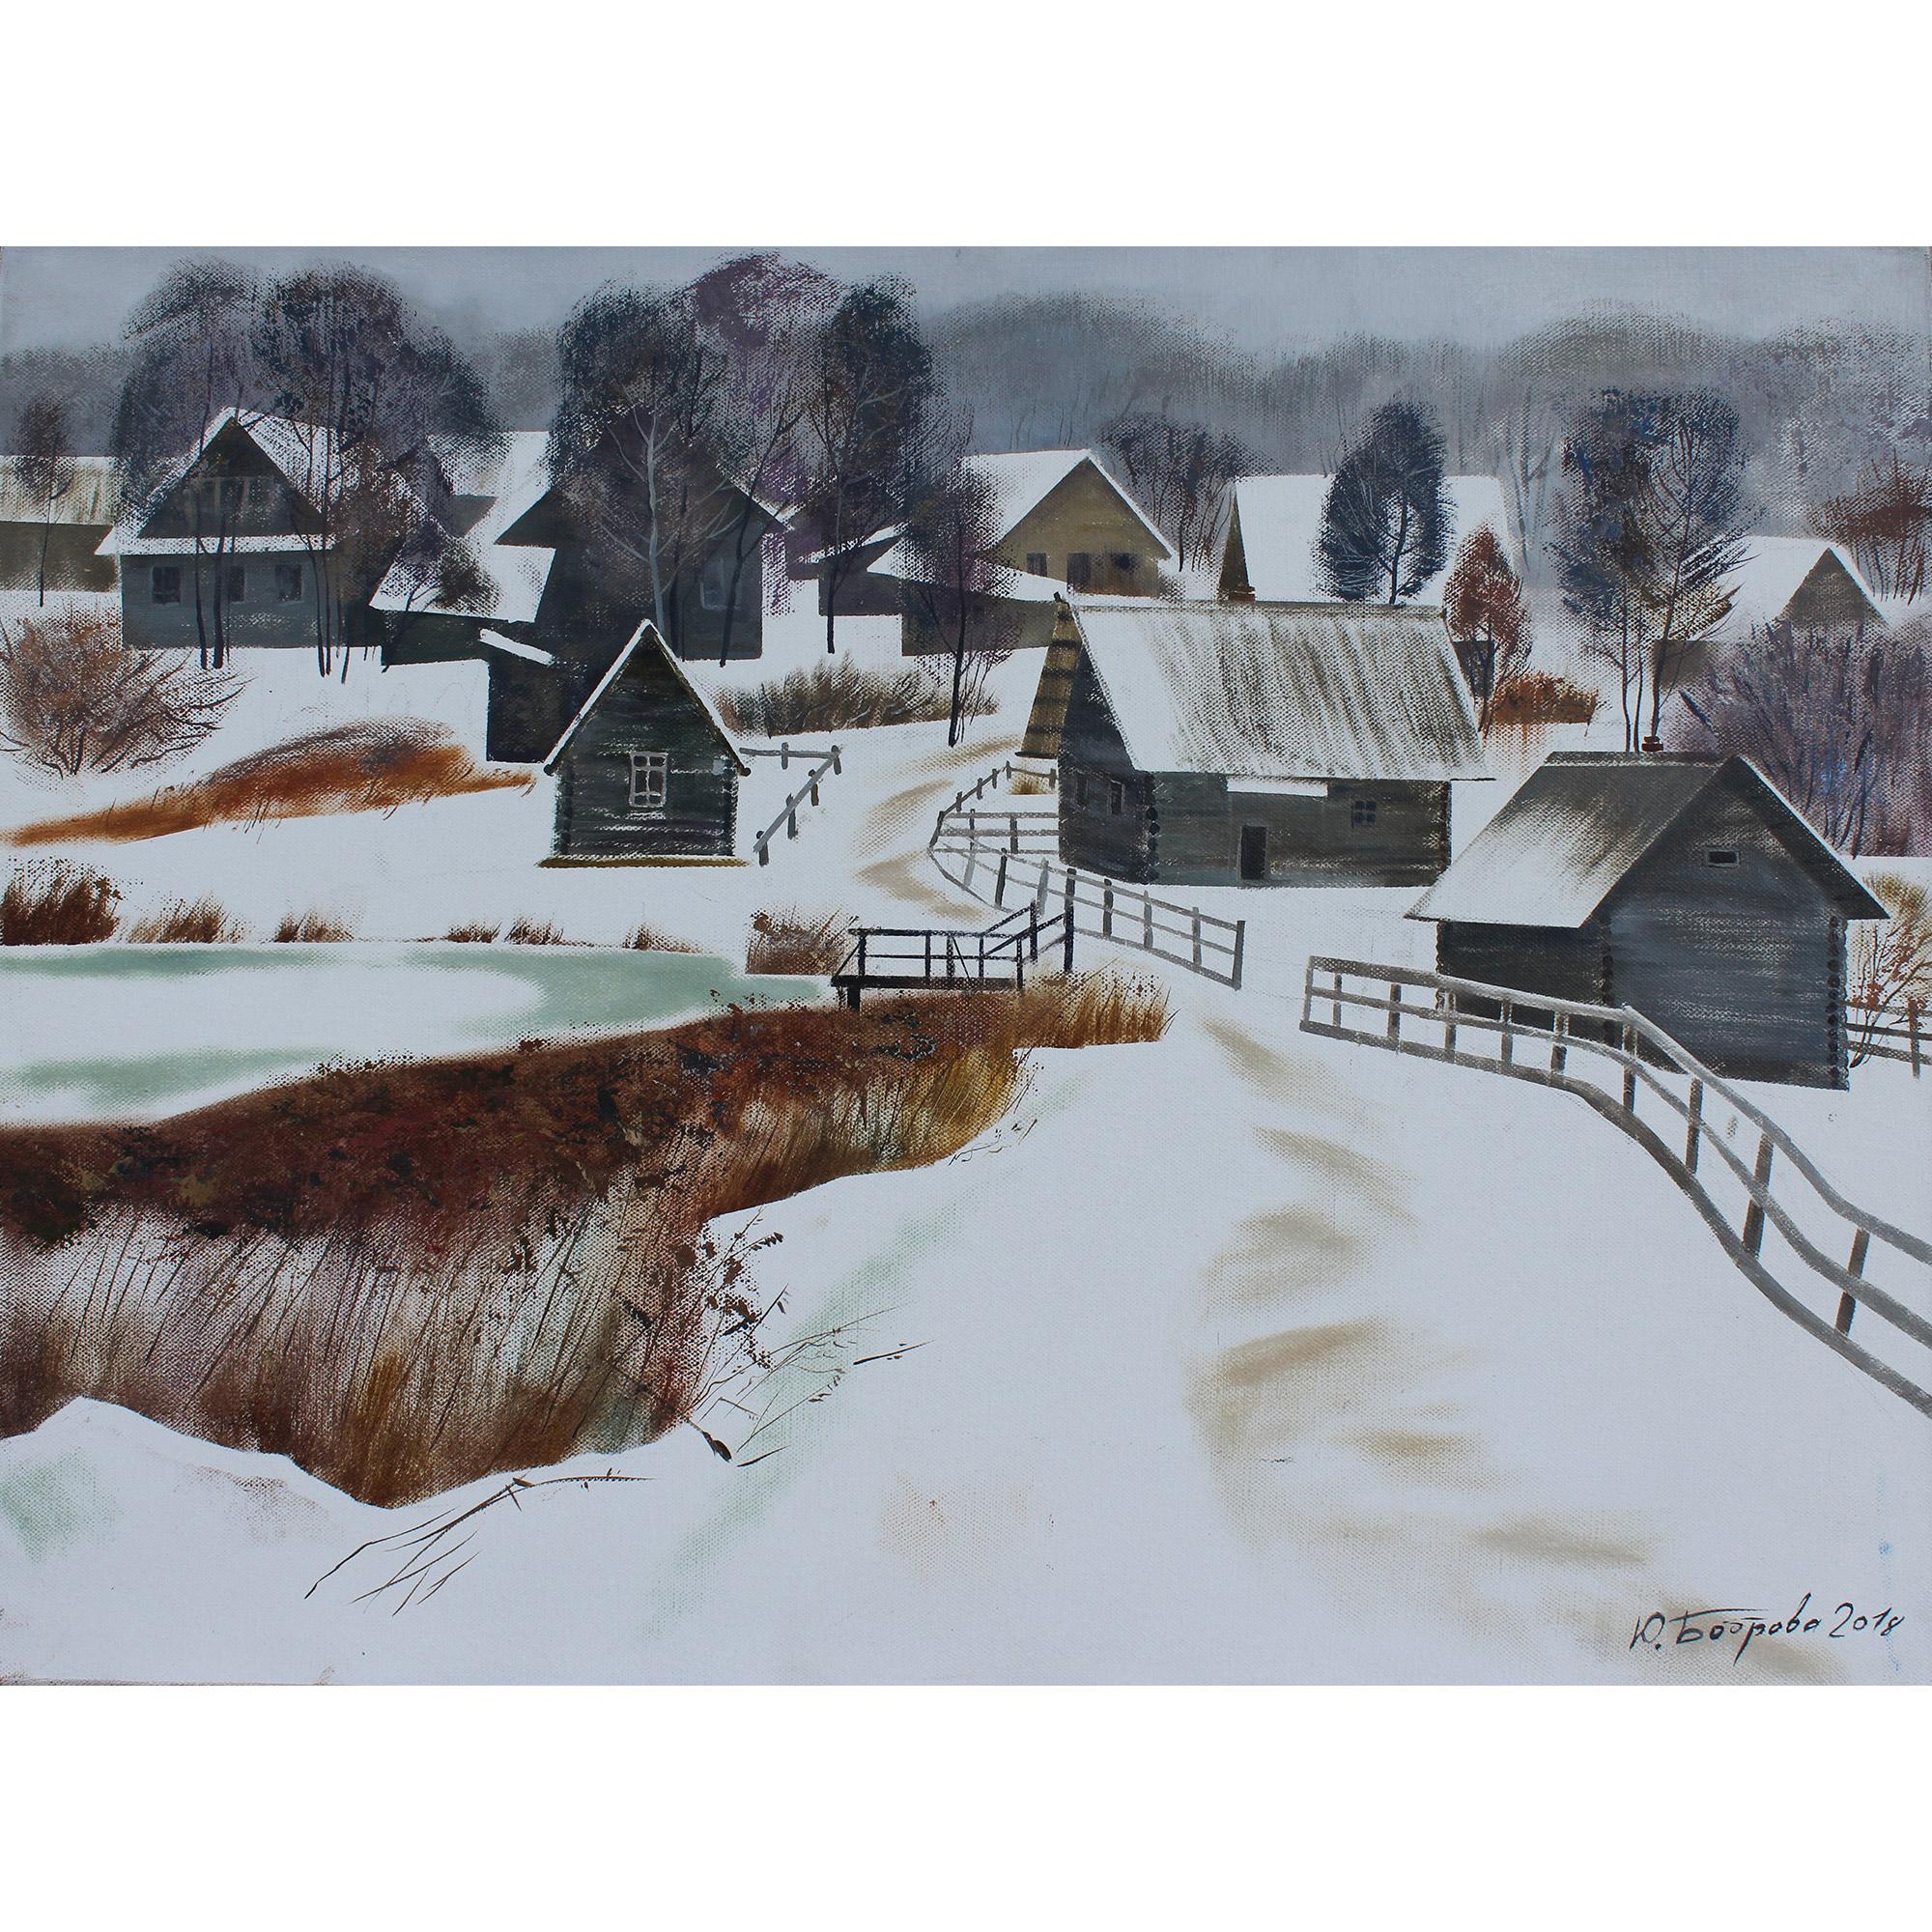 Картинки утро, мороз, зима, деревня - обои 1600x900, картинка №125003